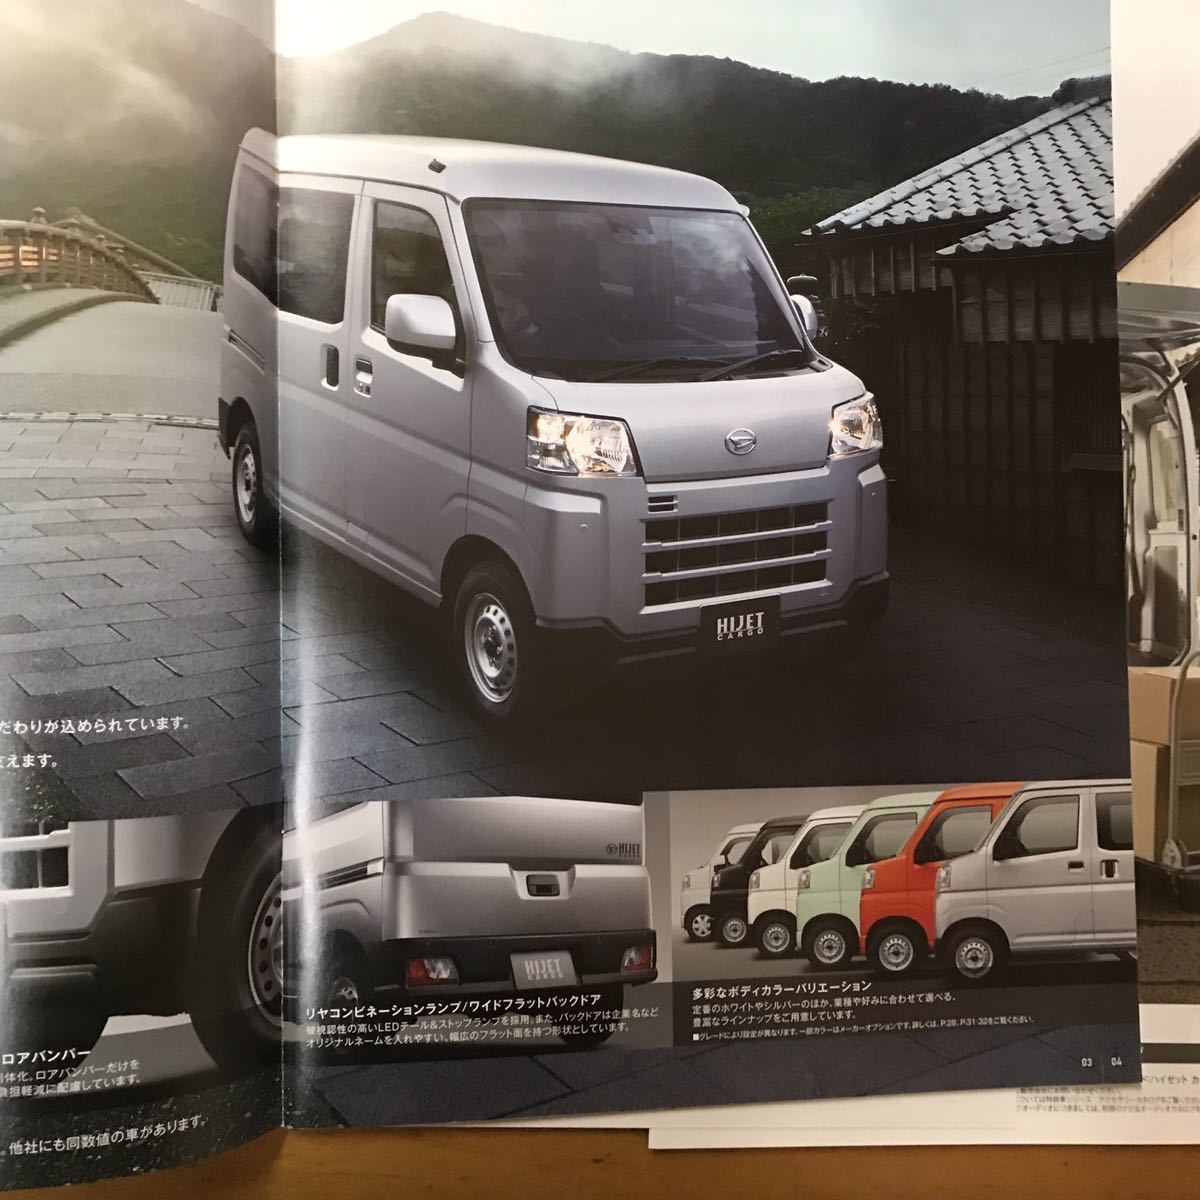 [1507] Daihatsu Hijet Cargo catalog 2021 year 12 month 